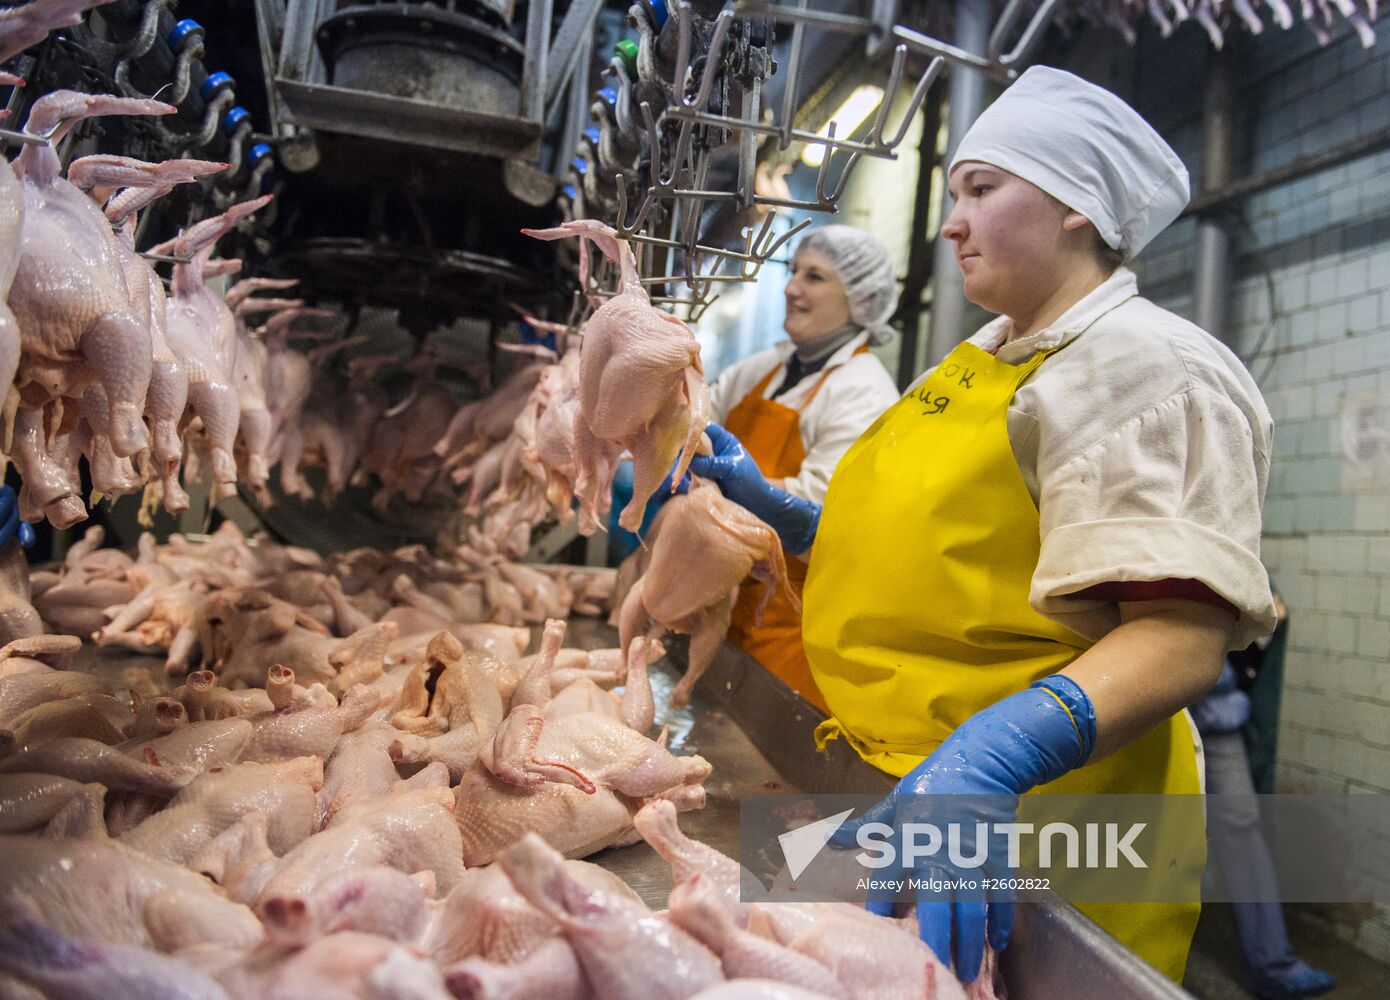 Sibirskaya poultry plant in Omsk